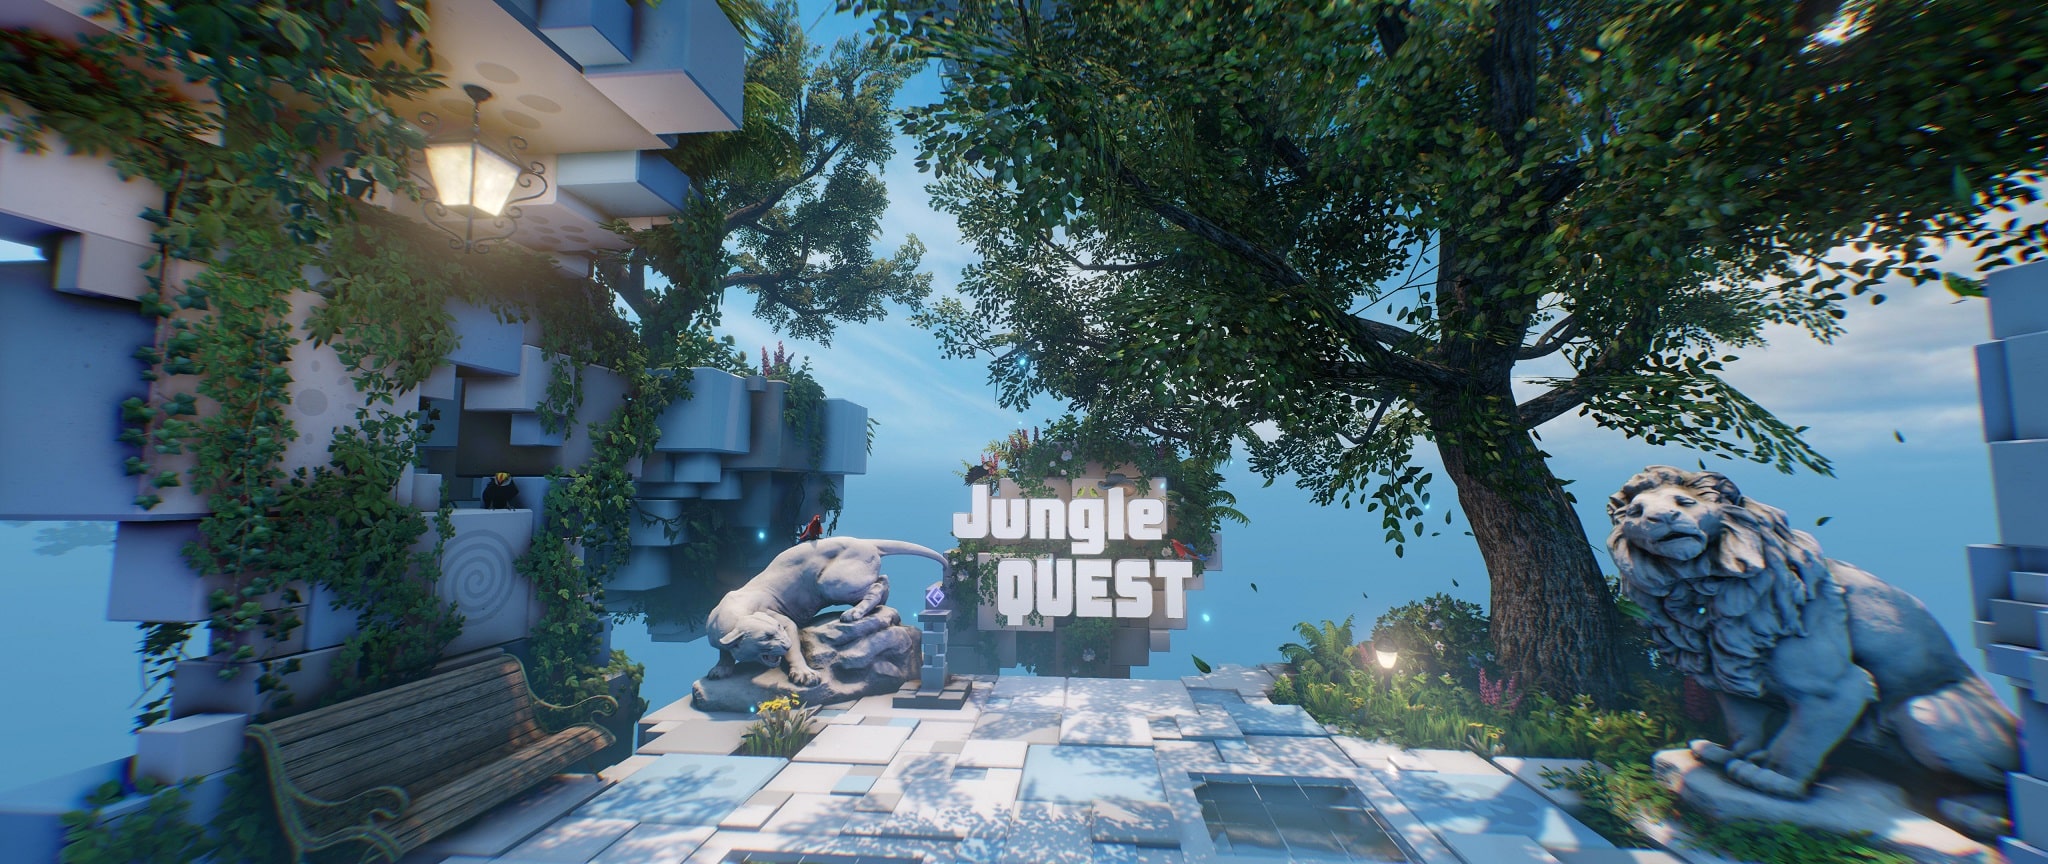 Jungle quest virtual reality screenshot 1 sml